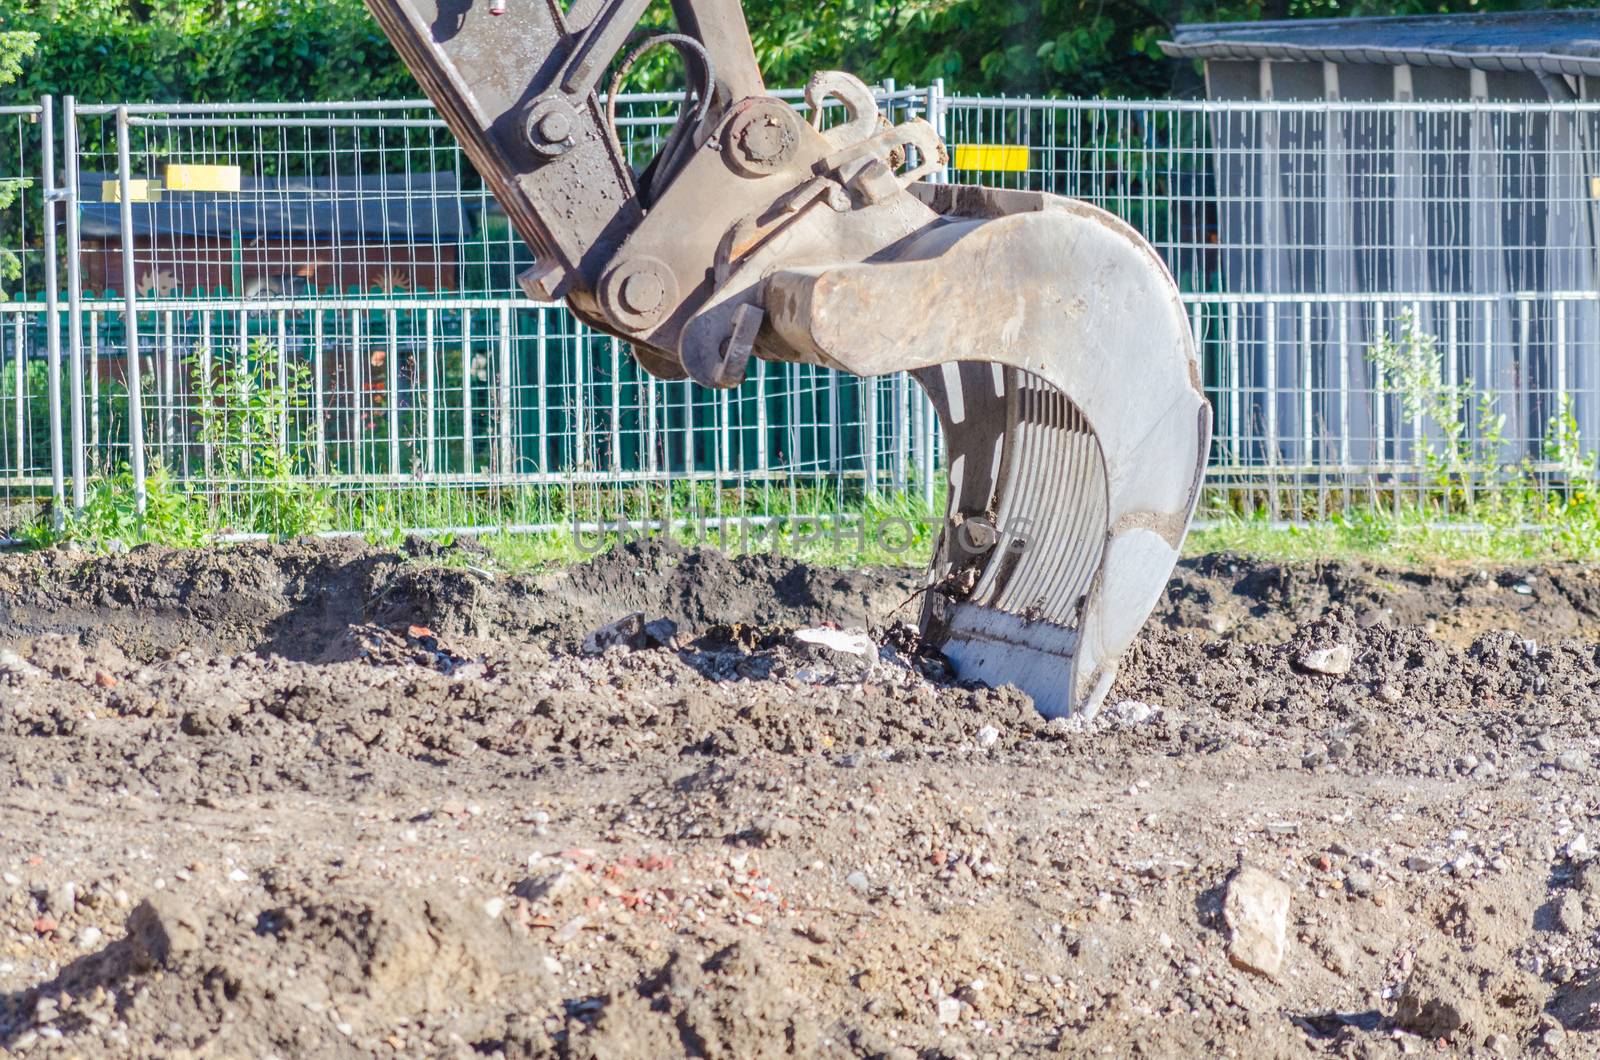 Excavator shovel by JFsPic